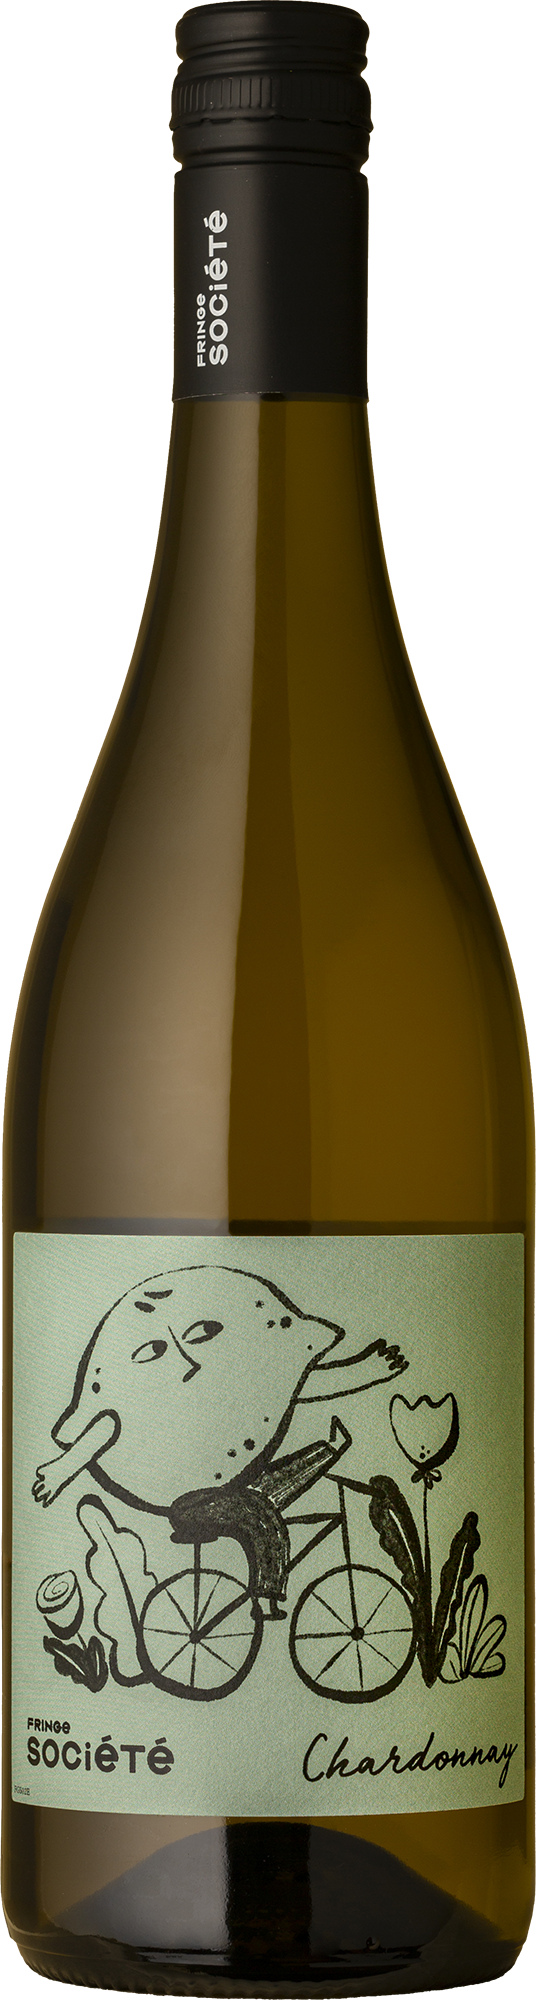 Fringe Société - Chardonnay 2021 White Wine